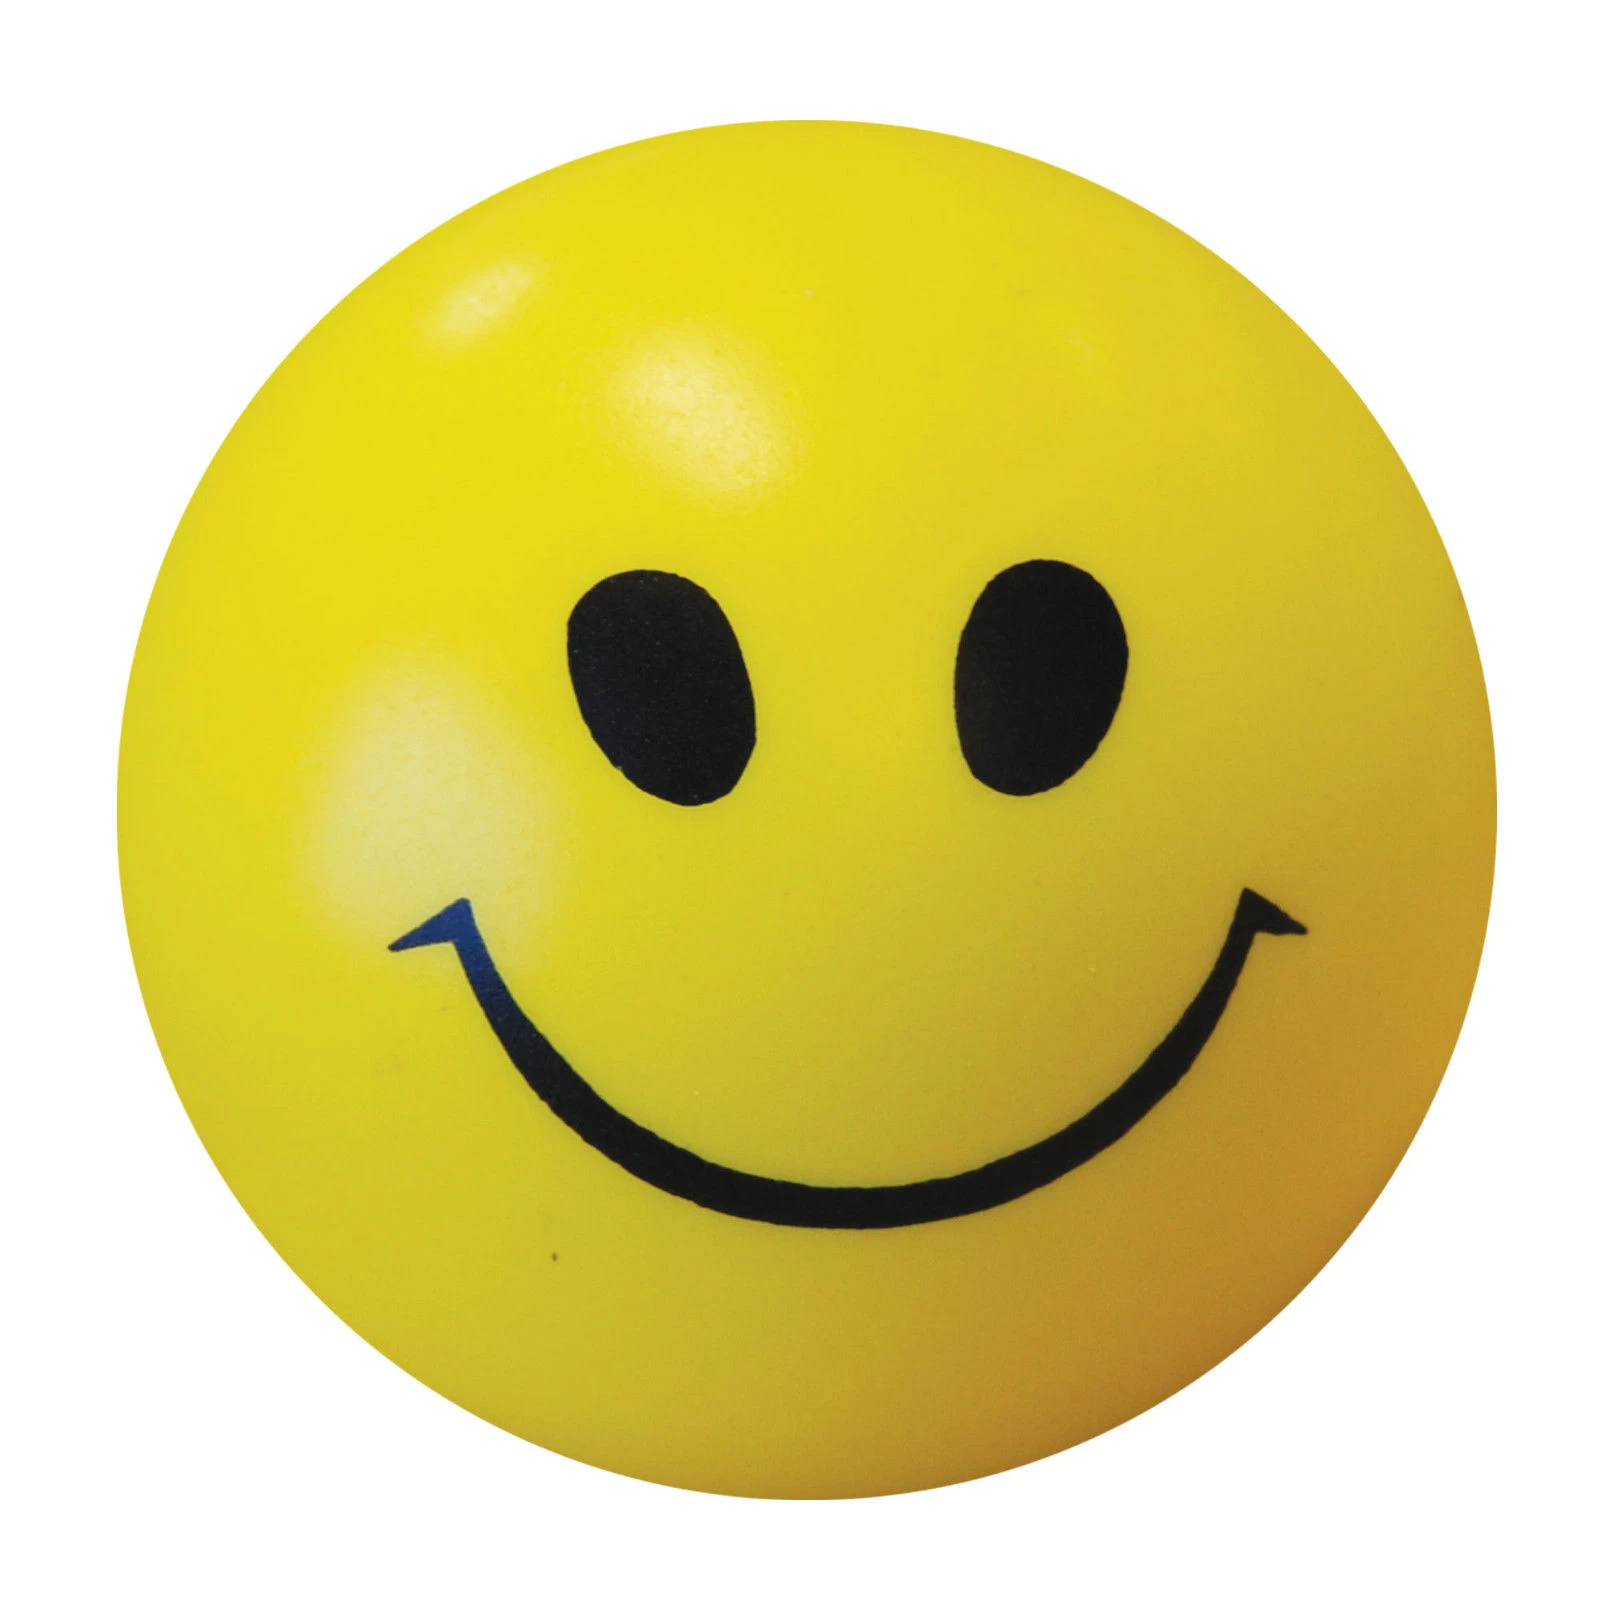 Polyurethane anti stress toys, stress ball online, foam stress ball, custom shaped stress balls, smiley stress ball